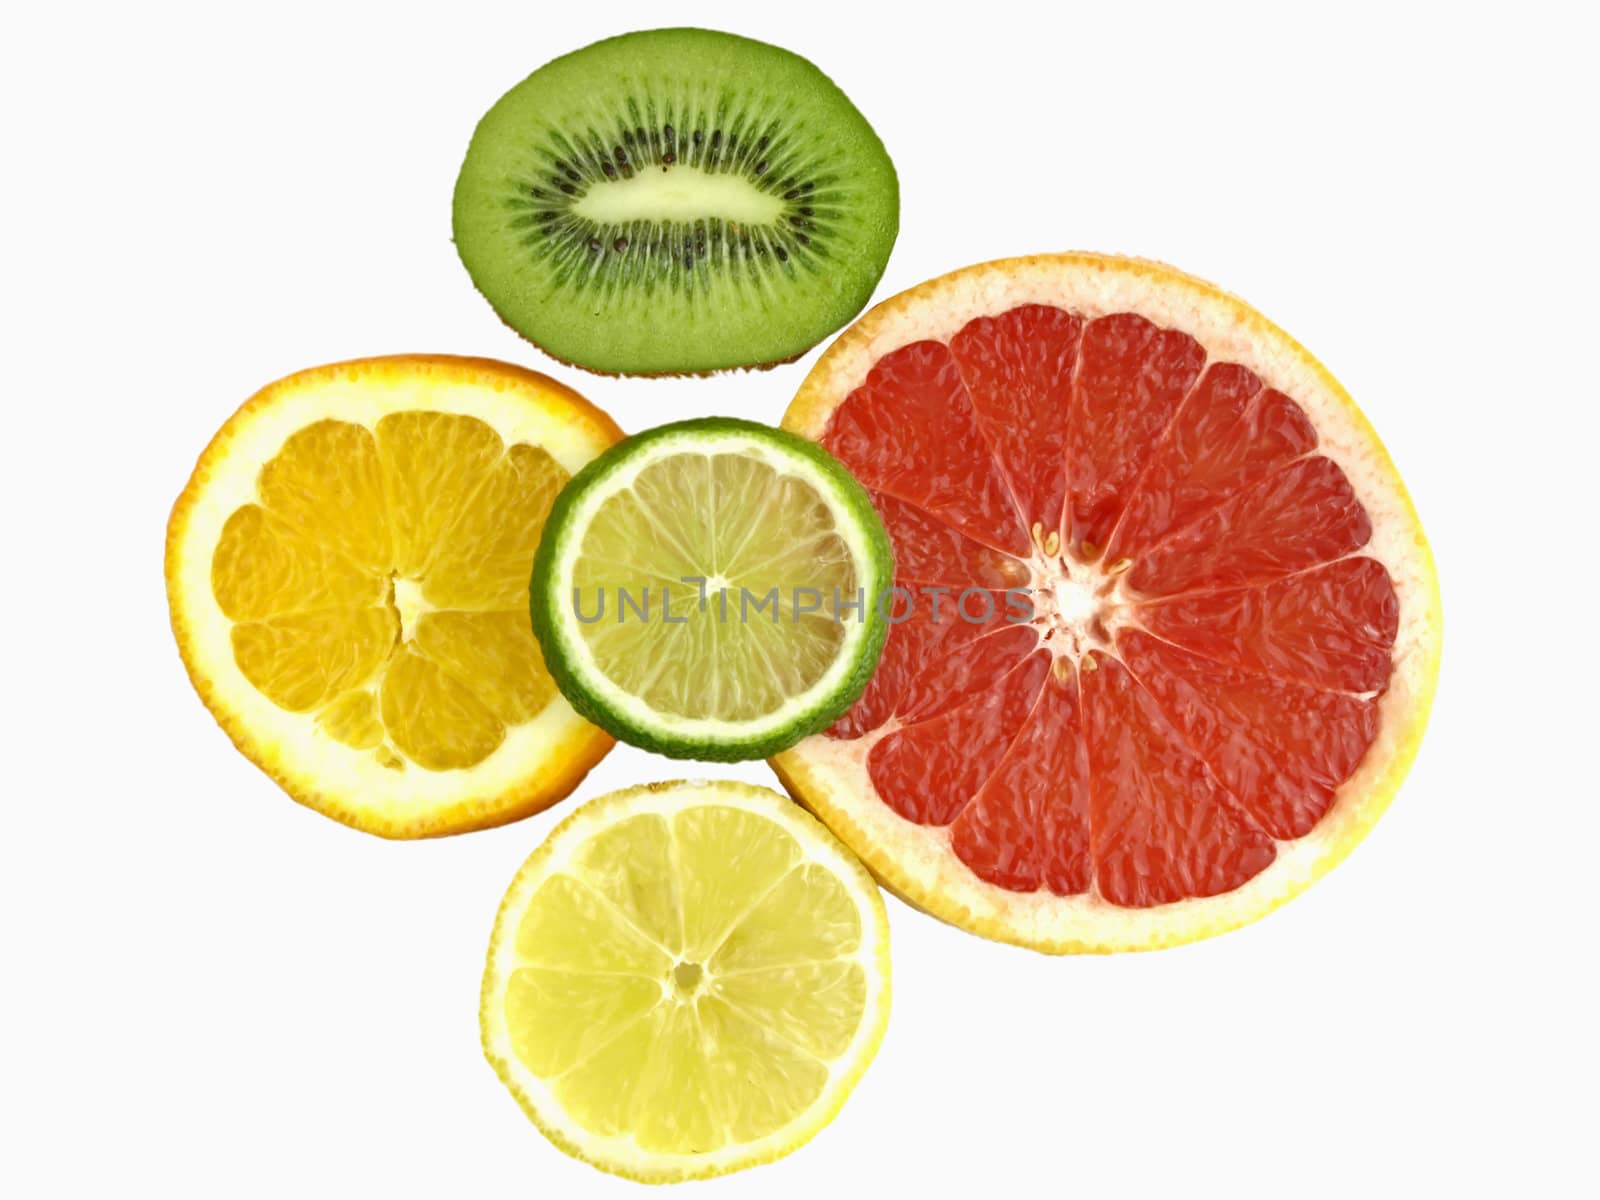 citrus fruits by Jochen